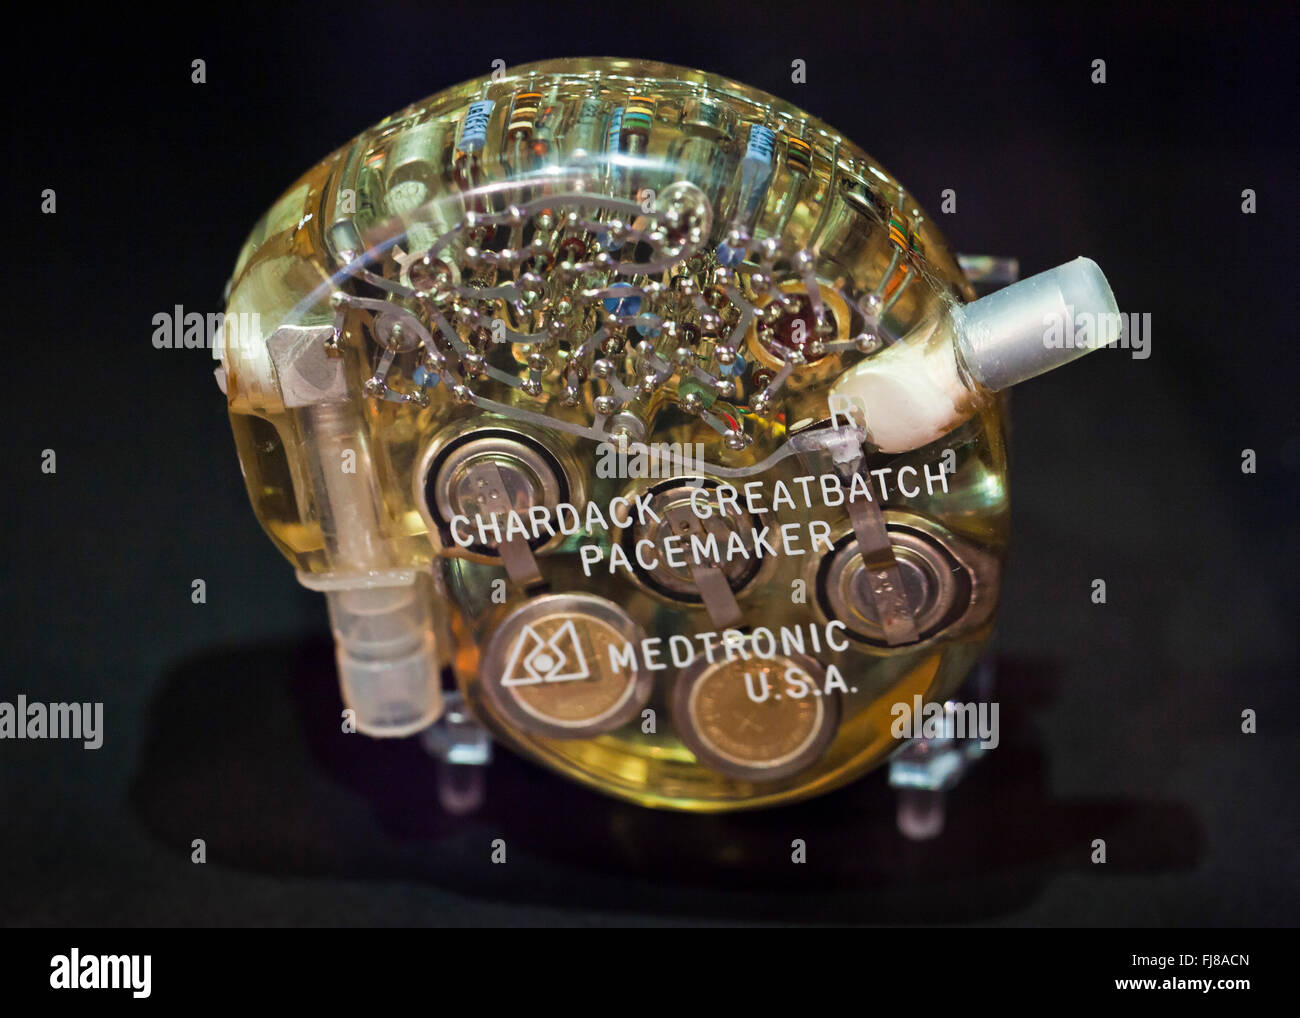 Medtronic Chardack Greatbatch pacemaker, circa 1960 - US Patent and Trademark Office - Alexandria, Virginia, Stati Uniti d'America Foto Stock